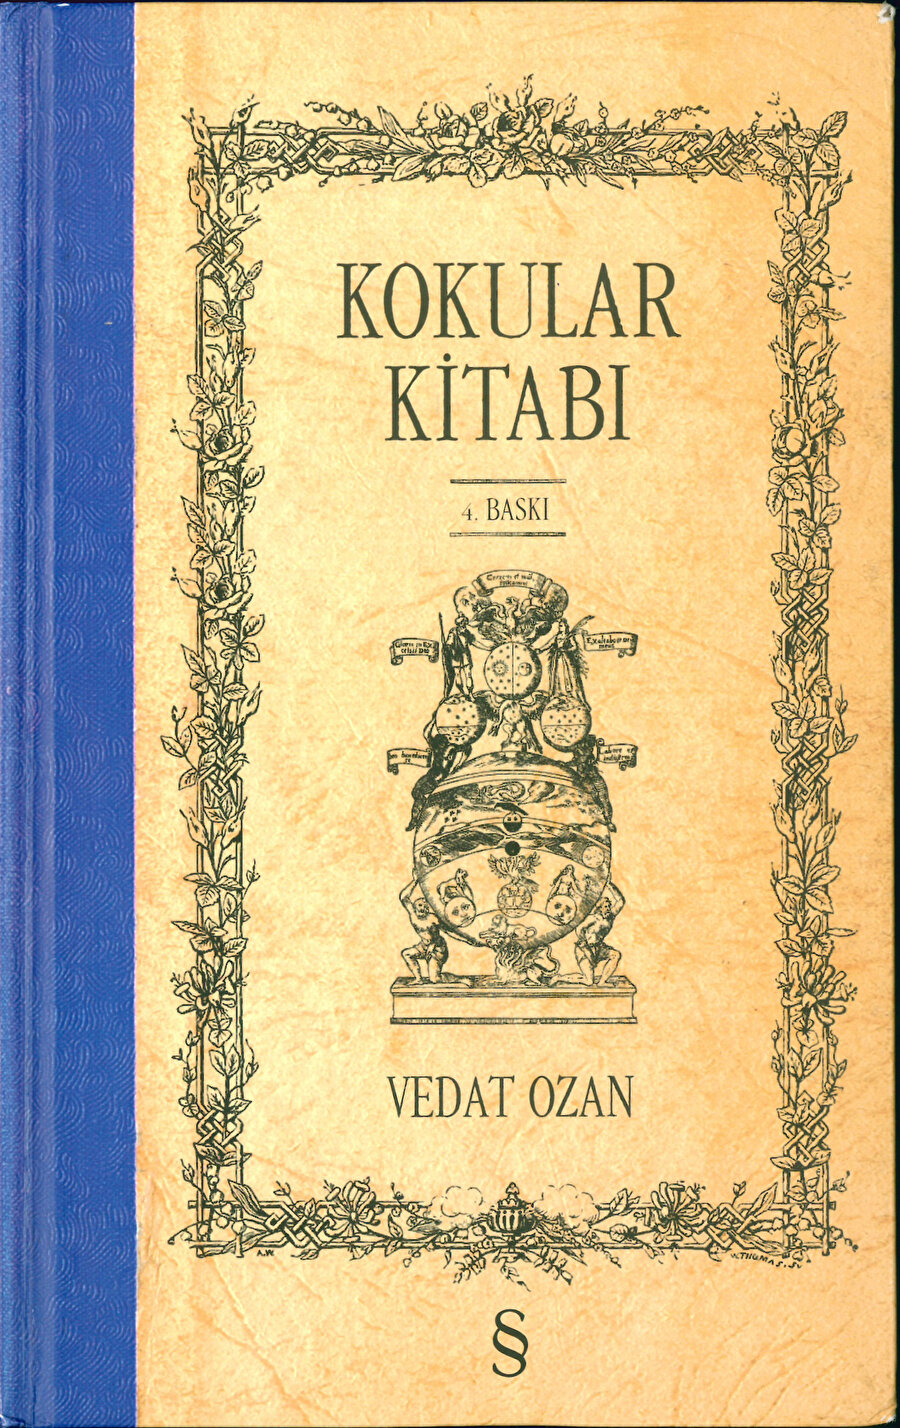 Kokular Kitabı, Sedat Ozan.